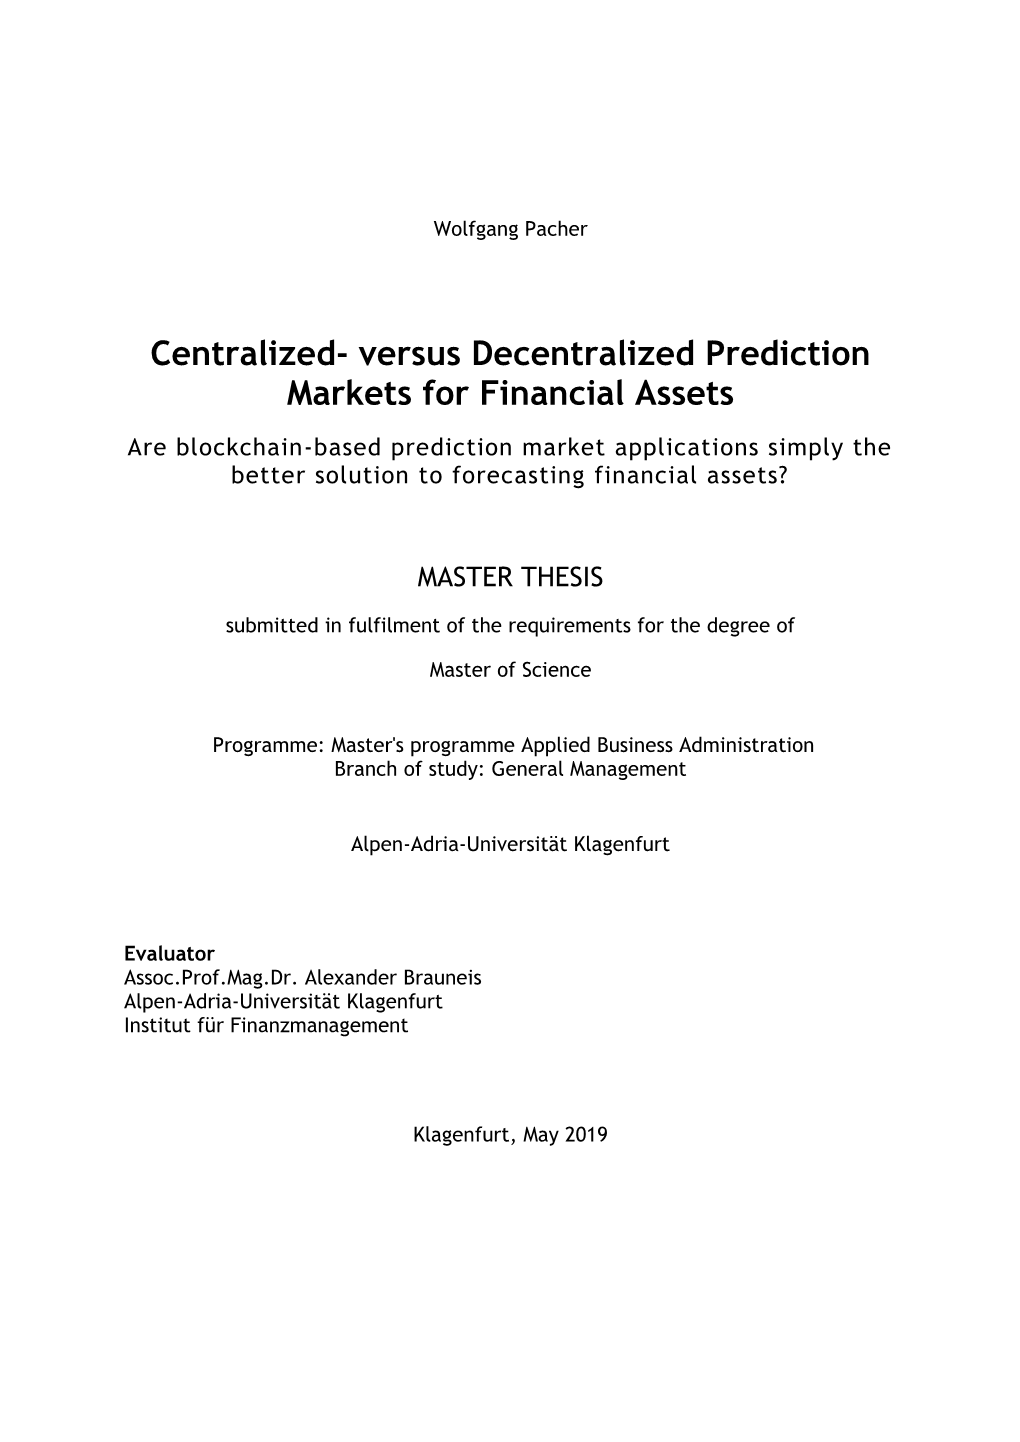 Versus Decentralized Prediction Markets for Financial Assets